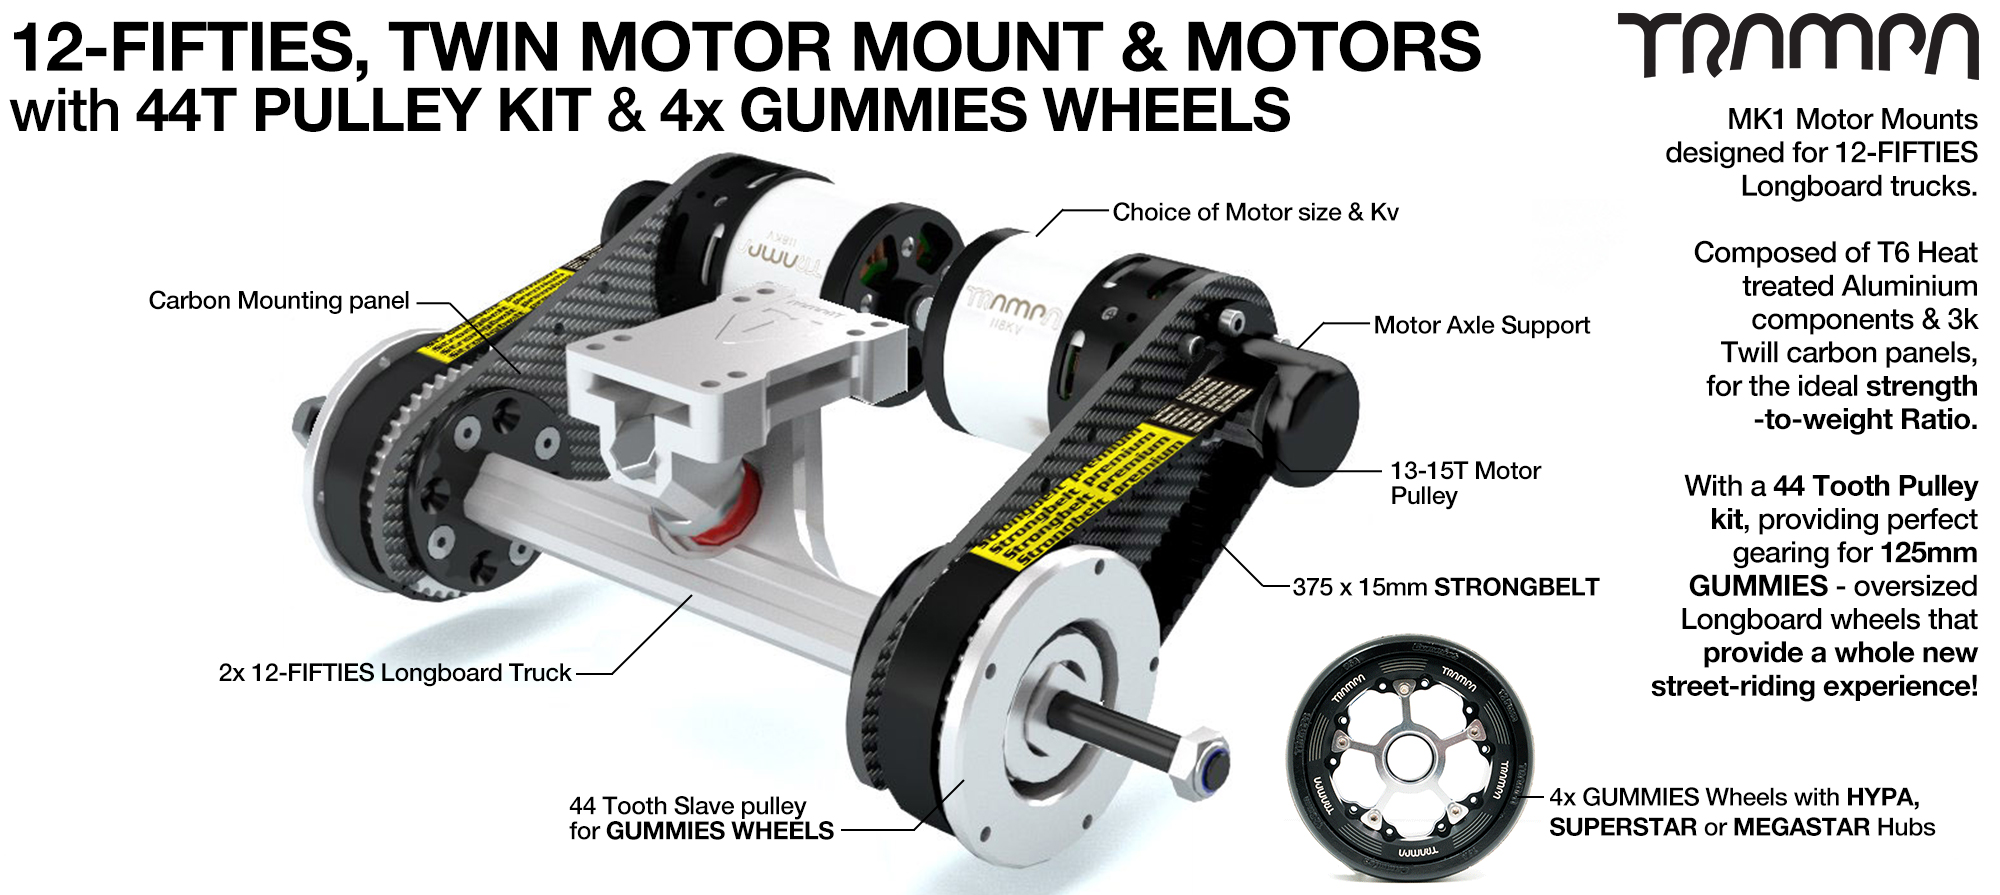 TWIN Original 12FiFties Motor mount & 44 Tooth Pulley Kit with MOTOR & 2x 12FiFties Trucks & 4x Gummies Wheels